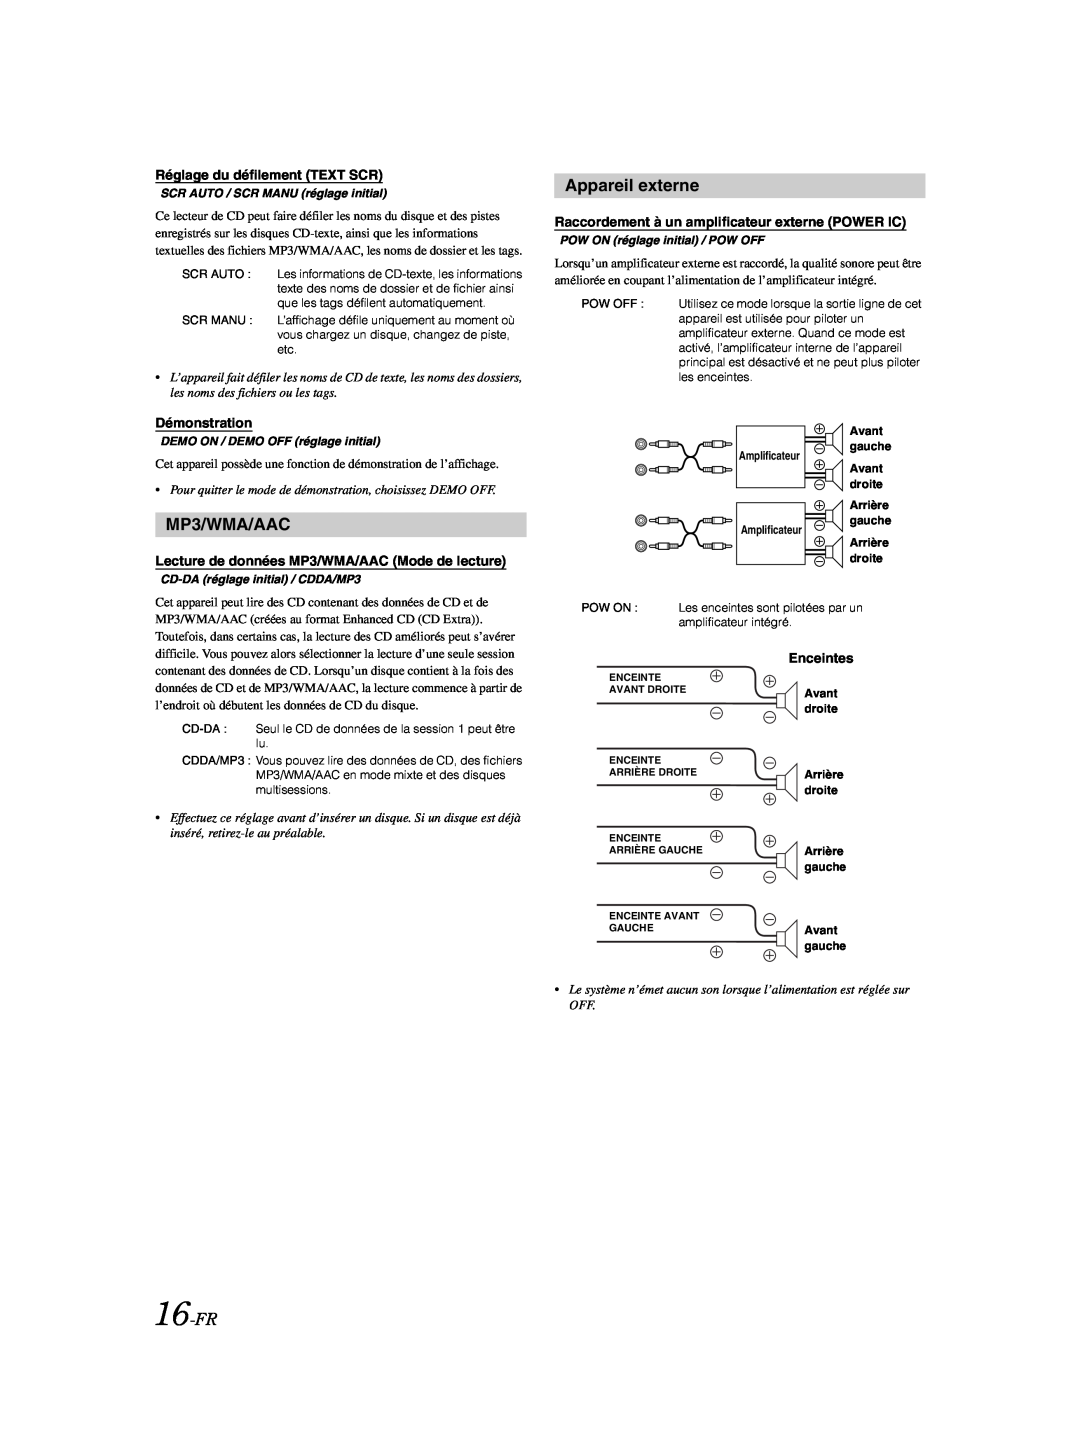 Alpine CDE-9873 owner manual Appareil externe, 16-FR, MP3/WMA/AAC 